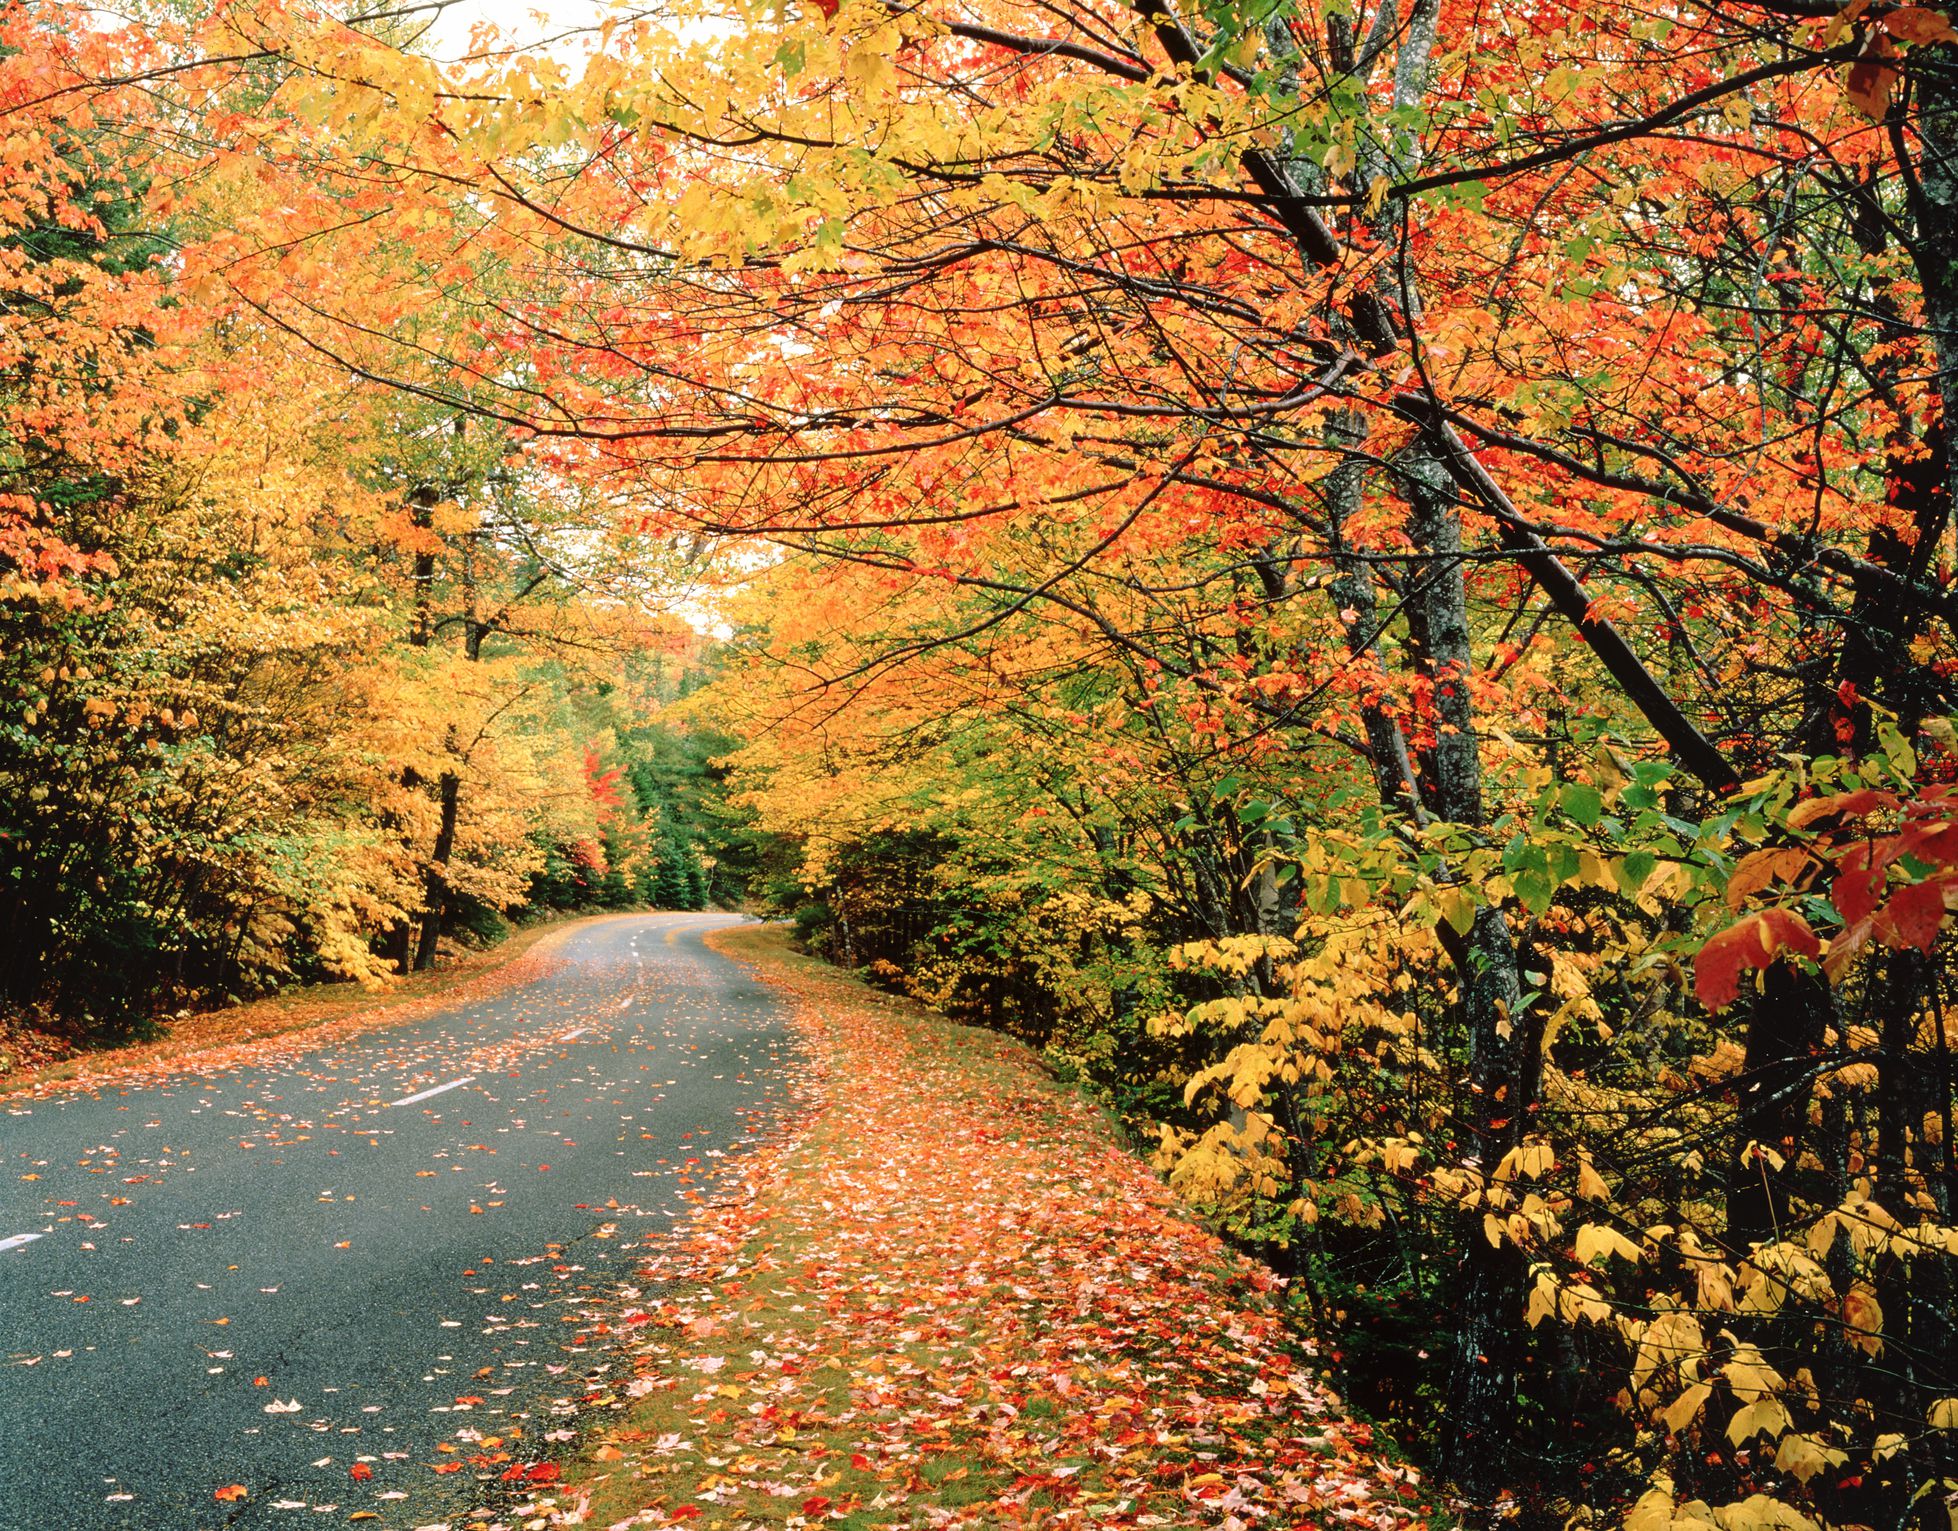 fall-foliage-acadia-national-park-me-576846244-579901c23df78c3276b50ebf.jpg